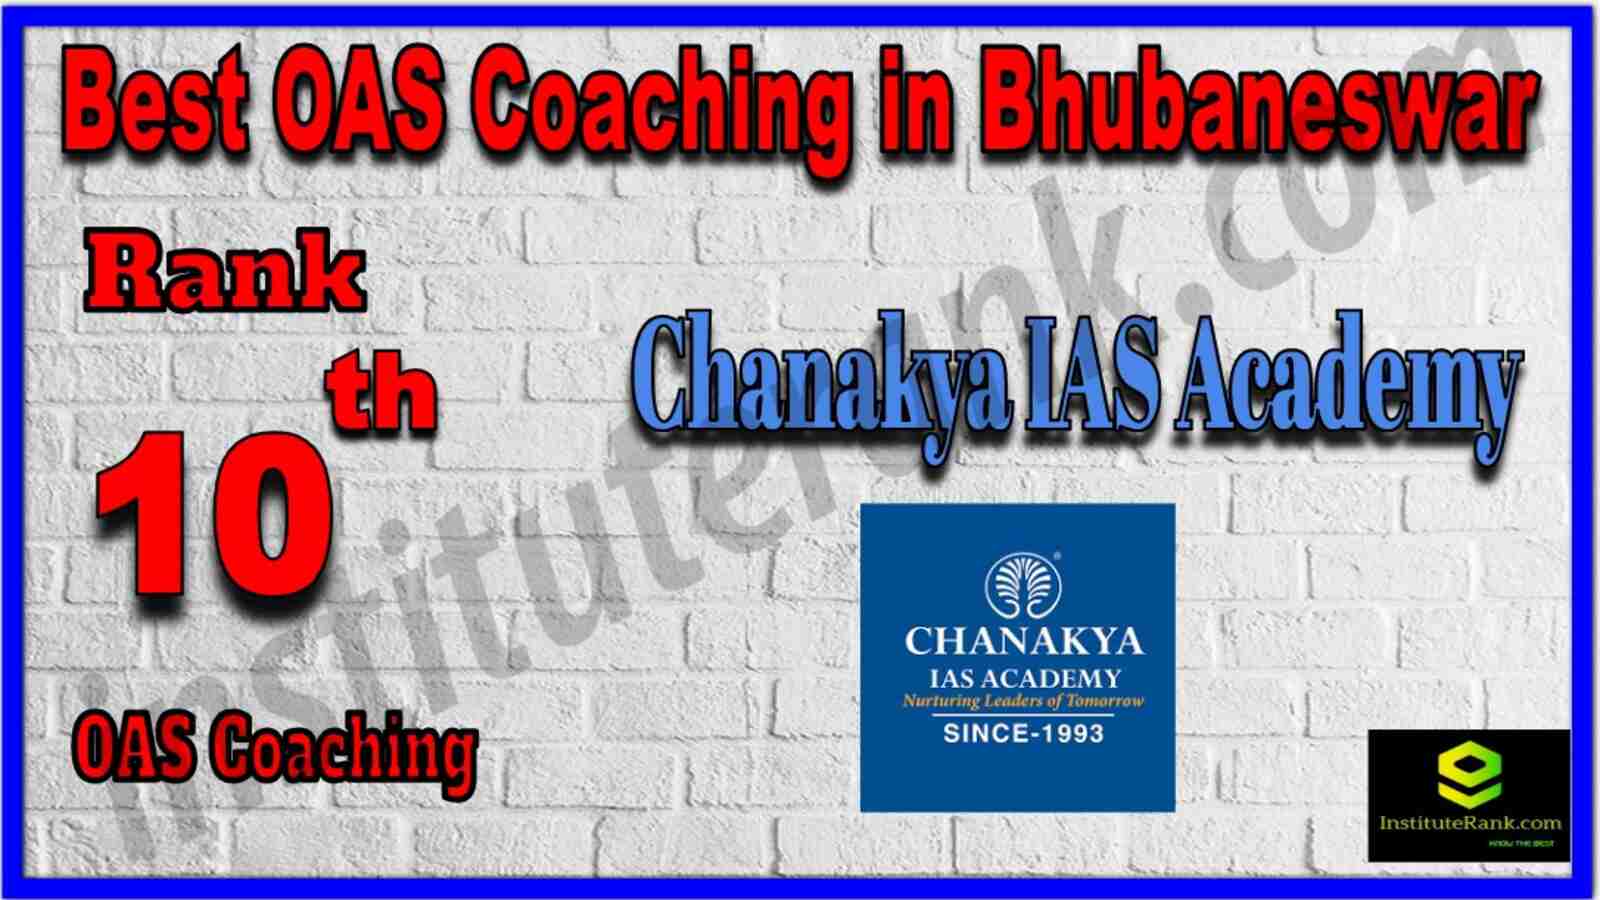 Rank 10 Best OAS Coaching in Bhubaneswar